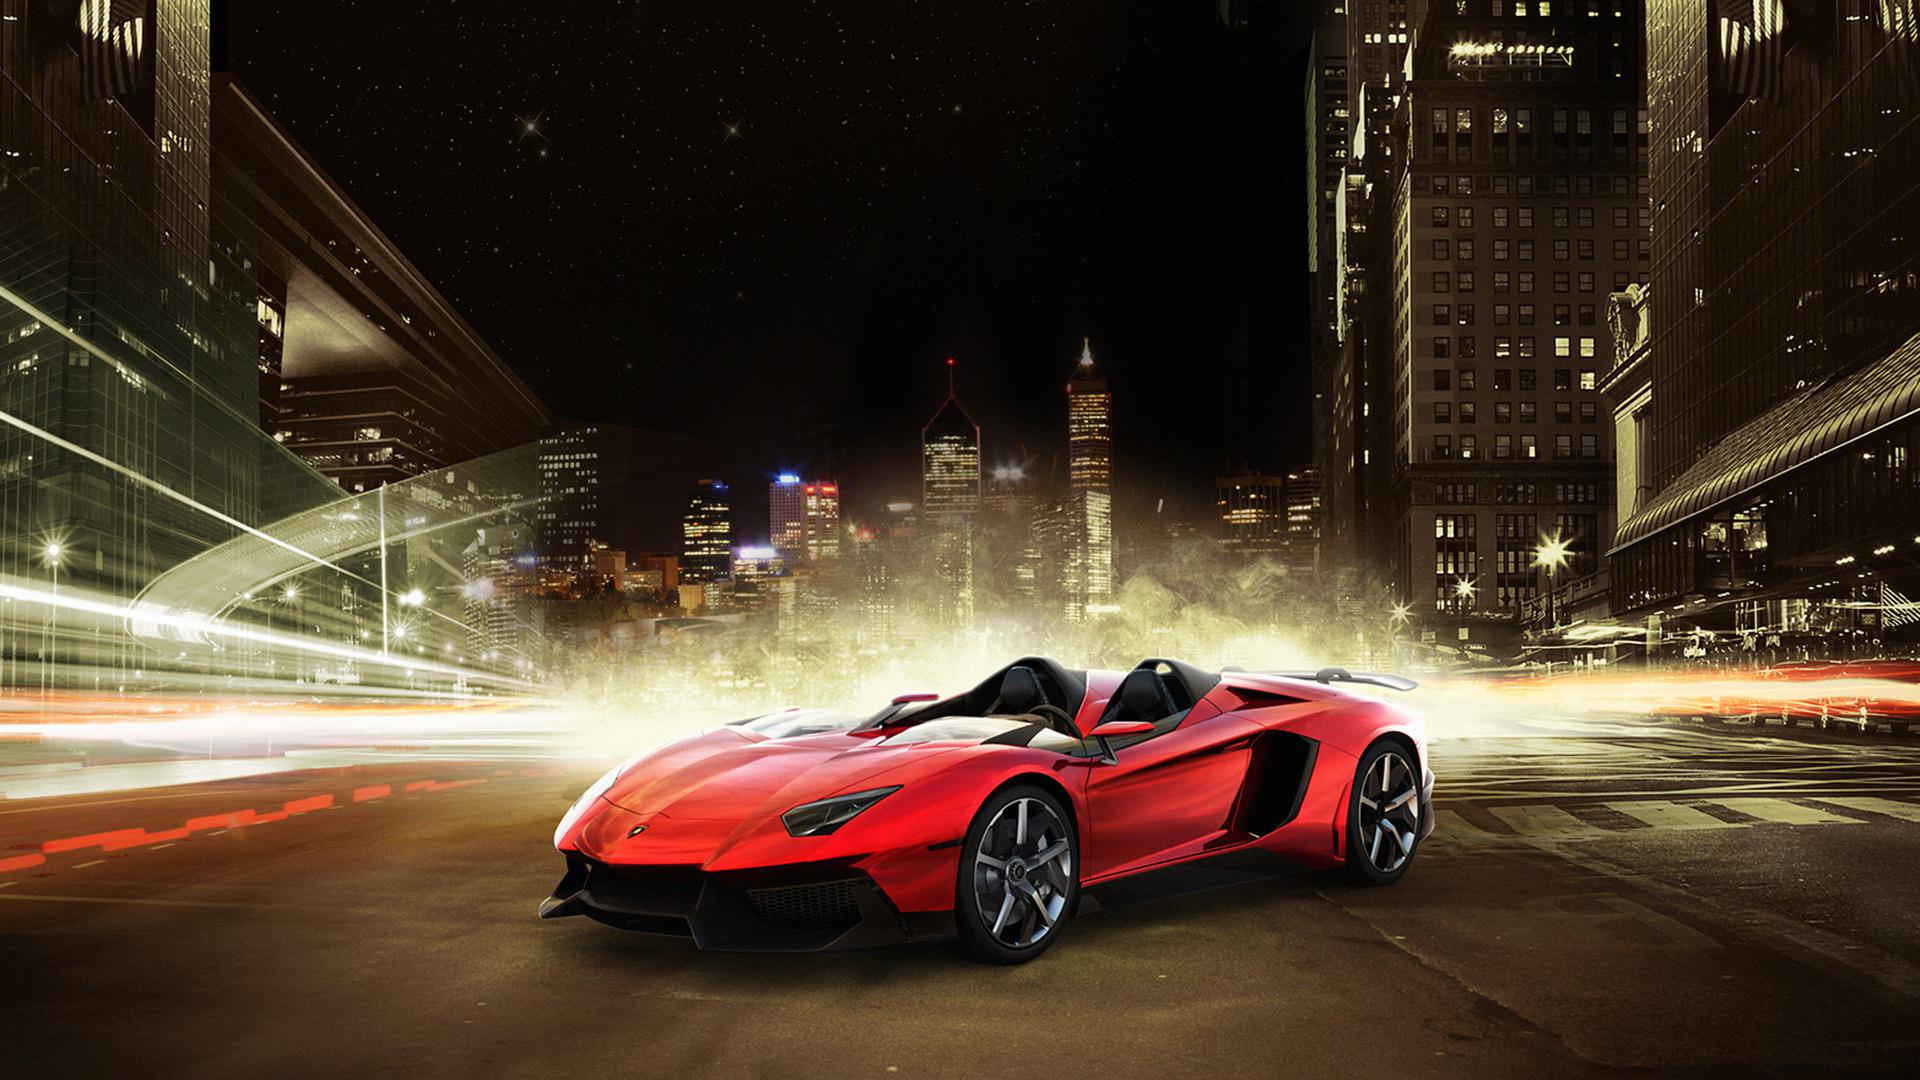 Lamborghini Aventador of J, red supercar >> HD Wallpaper, get it now!